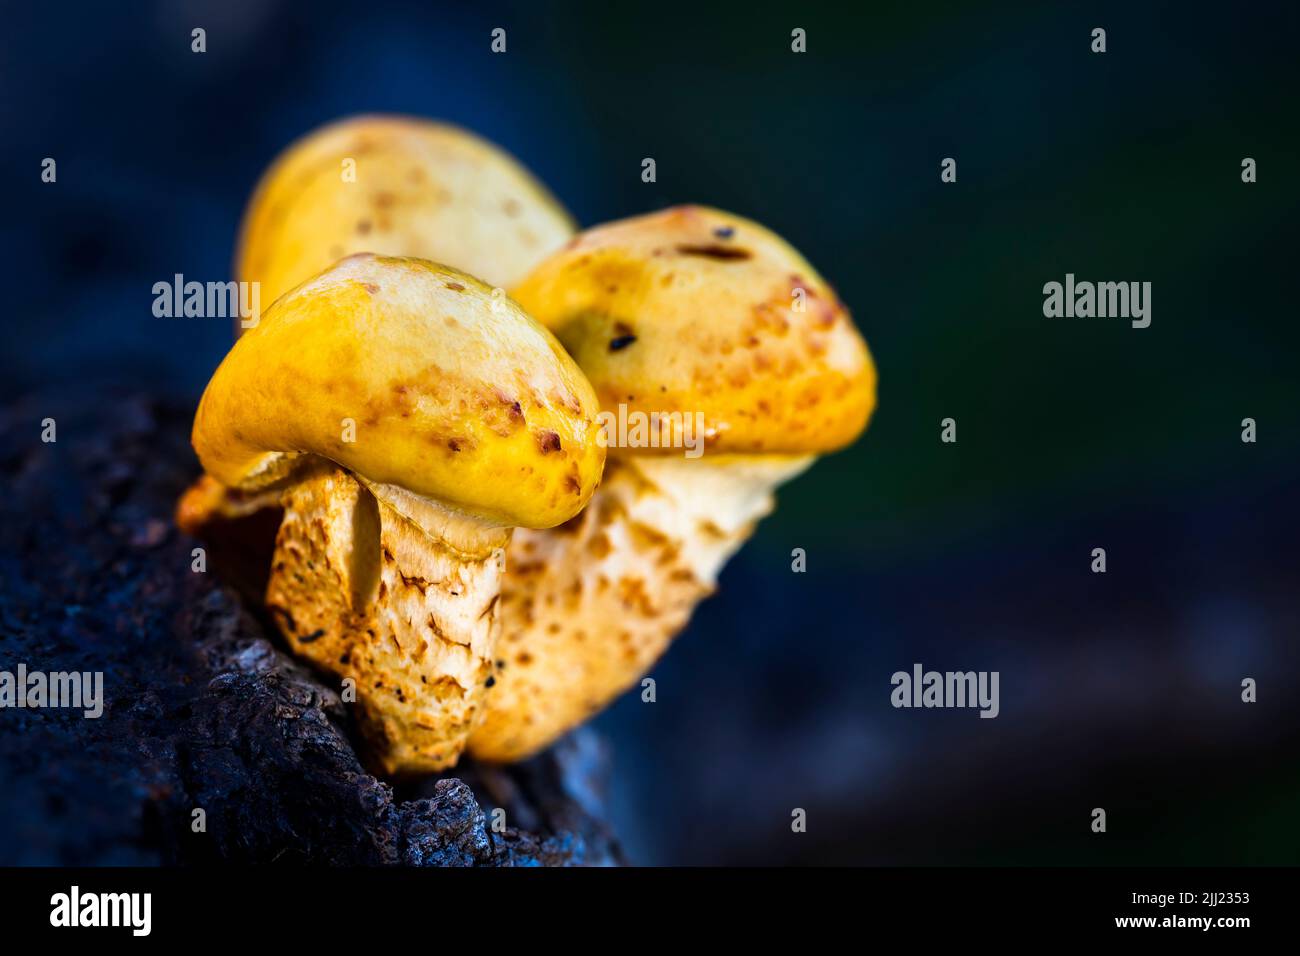 Spectacular rustgill (Gymnopilus junonius) mushrooms growing on wood, North Holland, Netherlands. Stock Photo